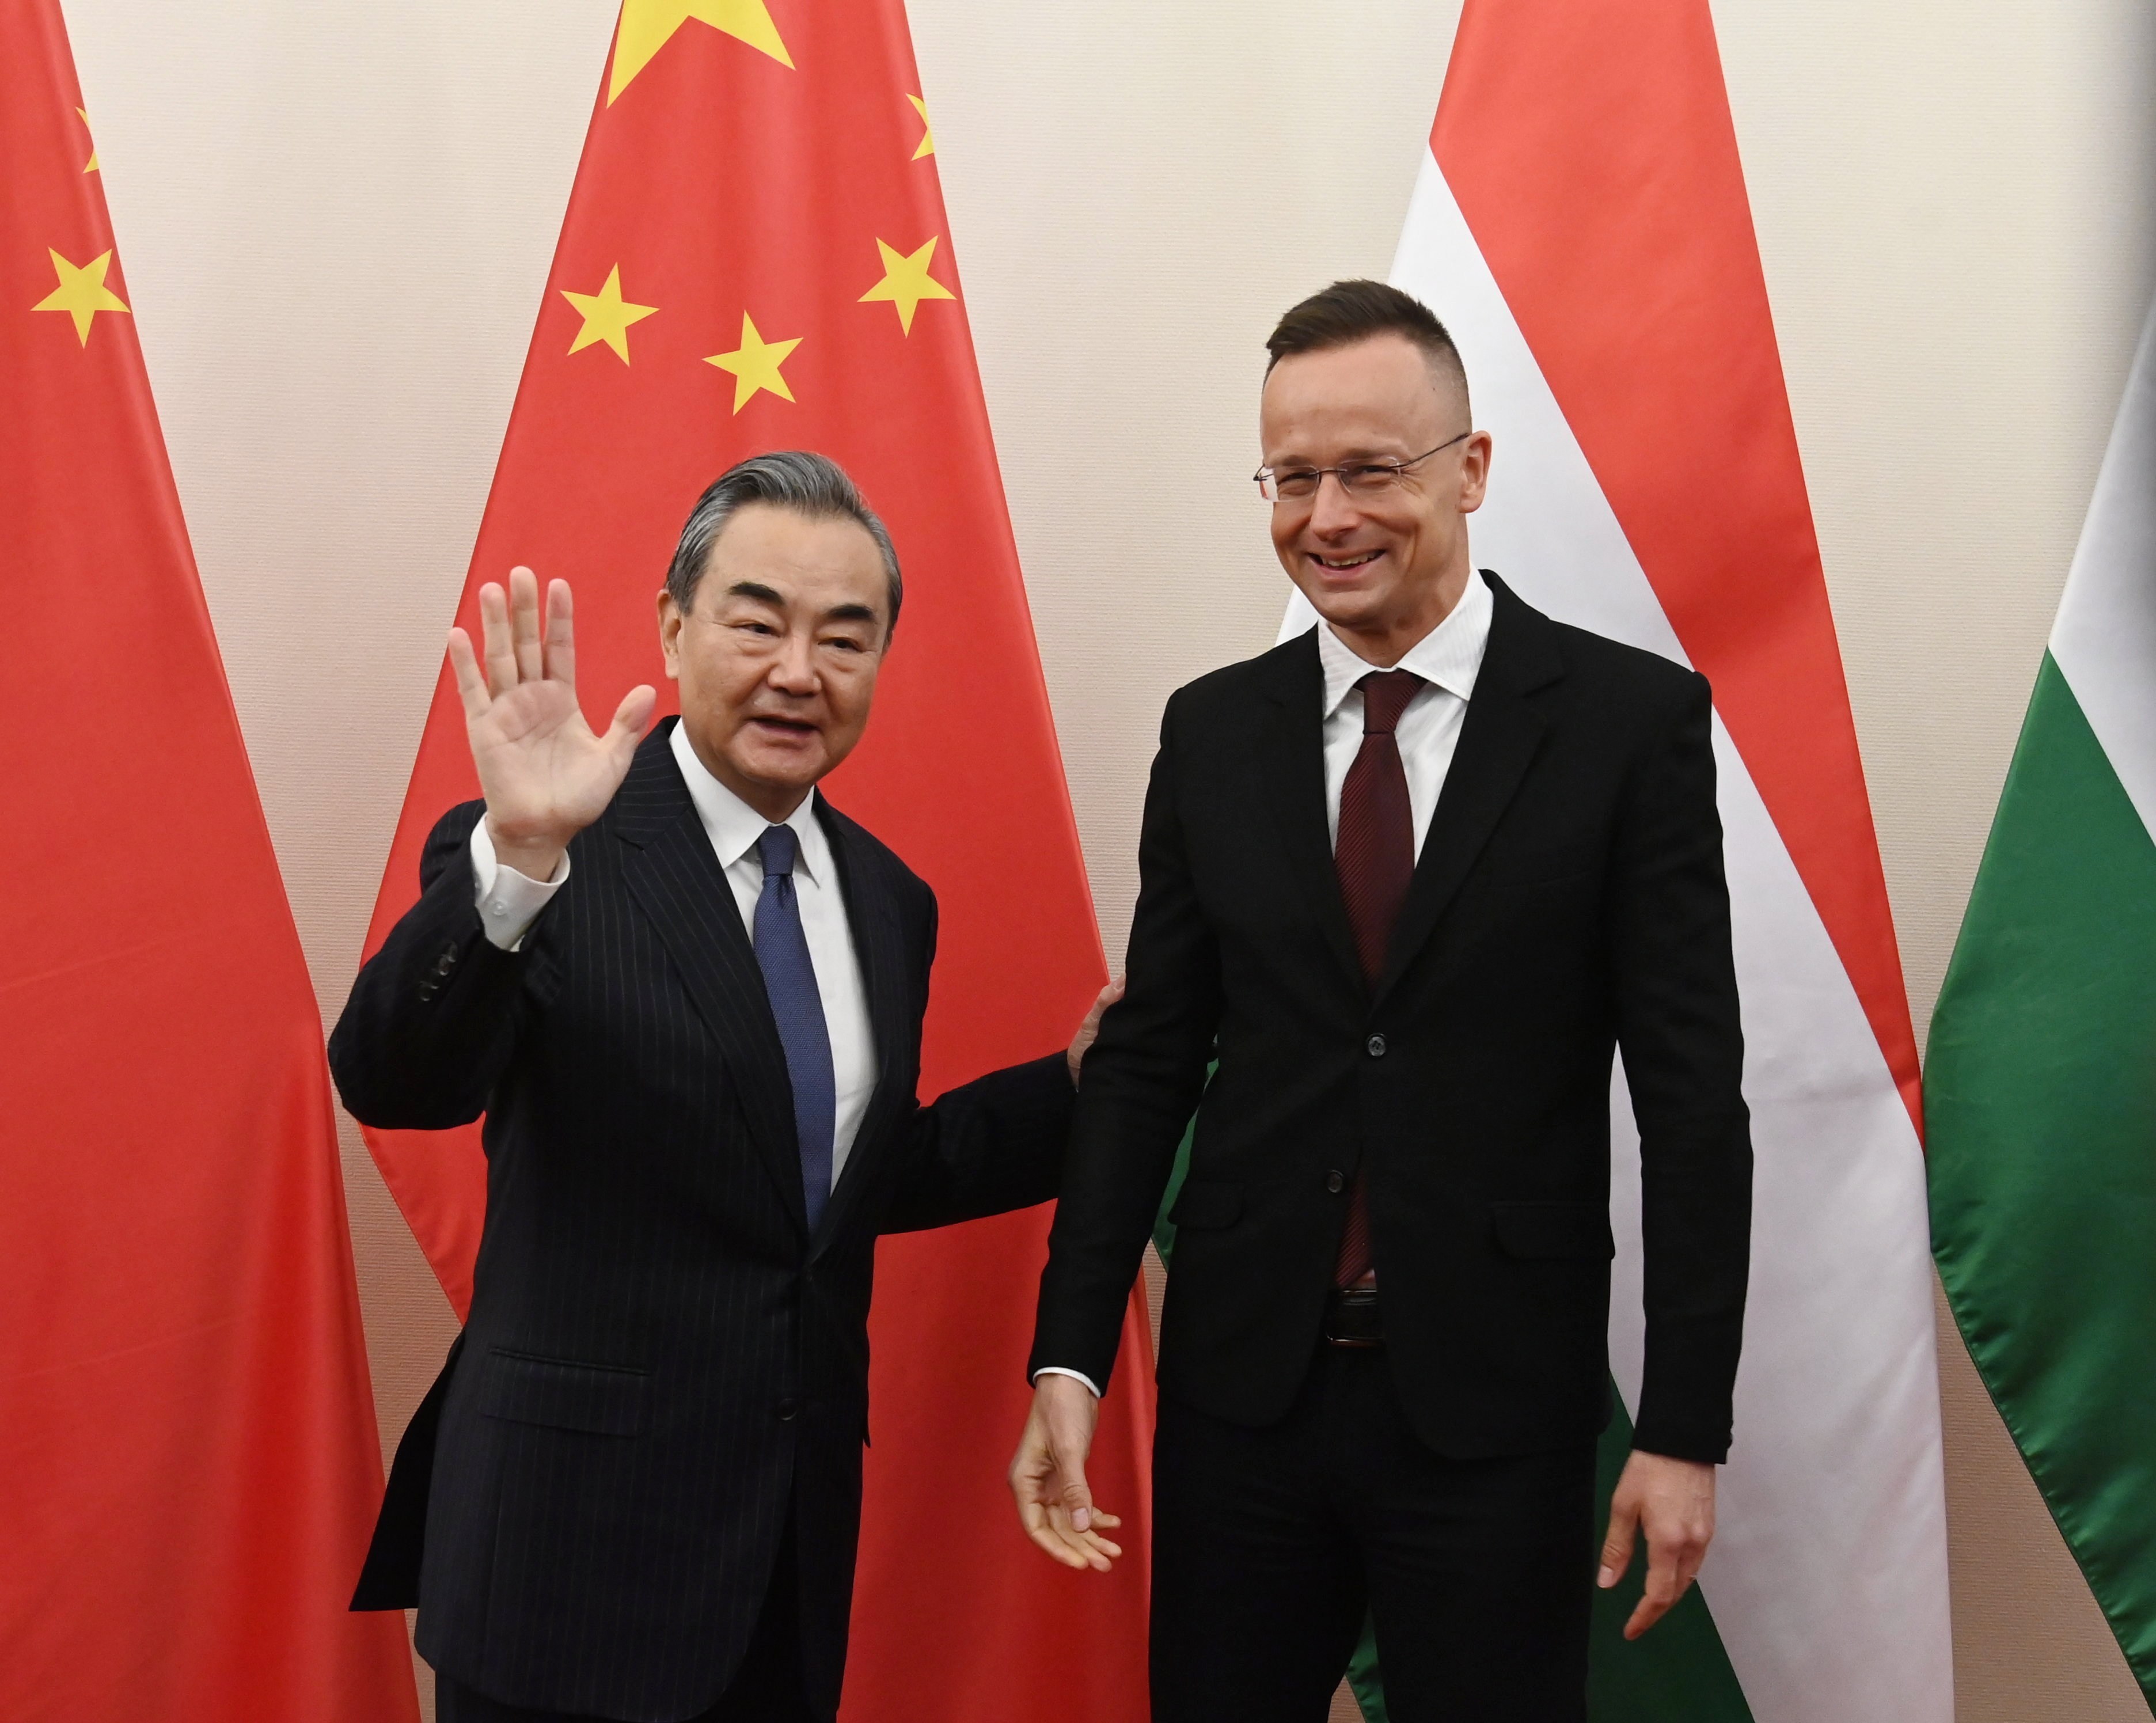 Szijjártó Meets With China's Wang Yi in Budapest